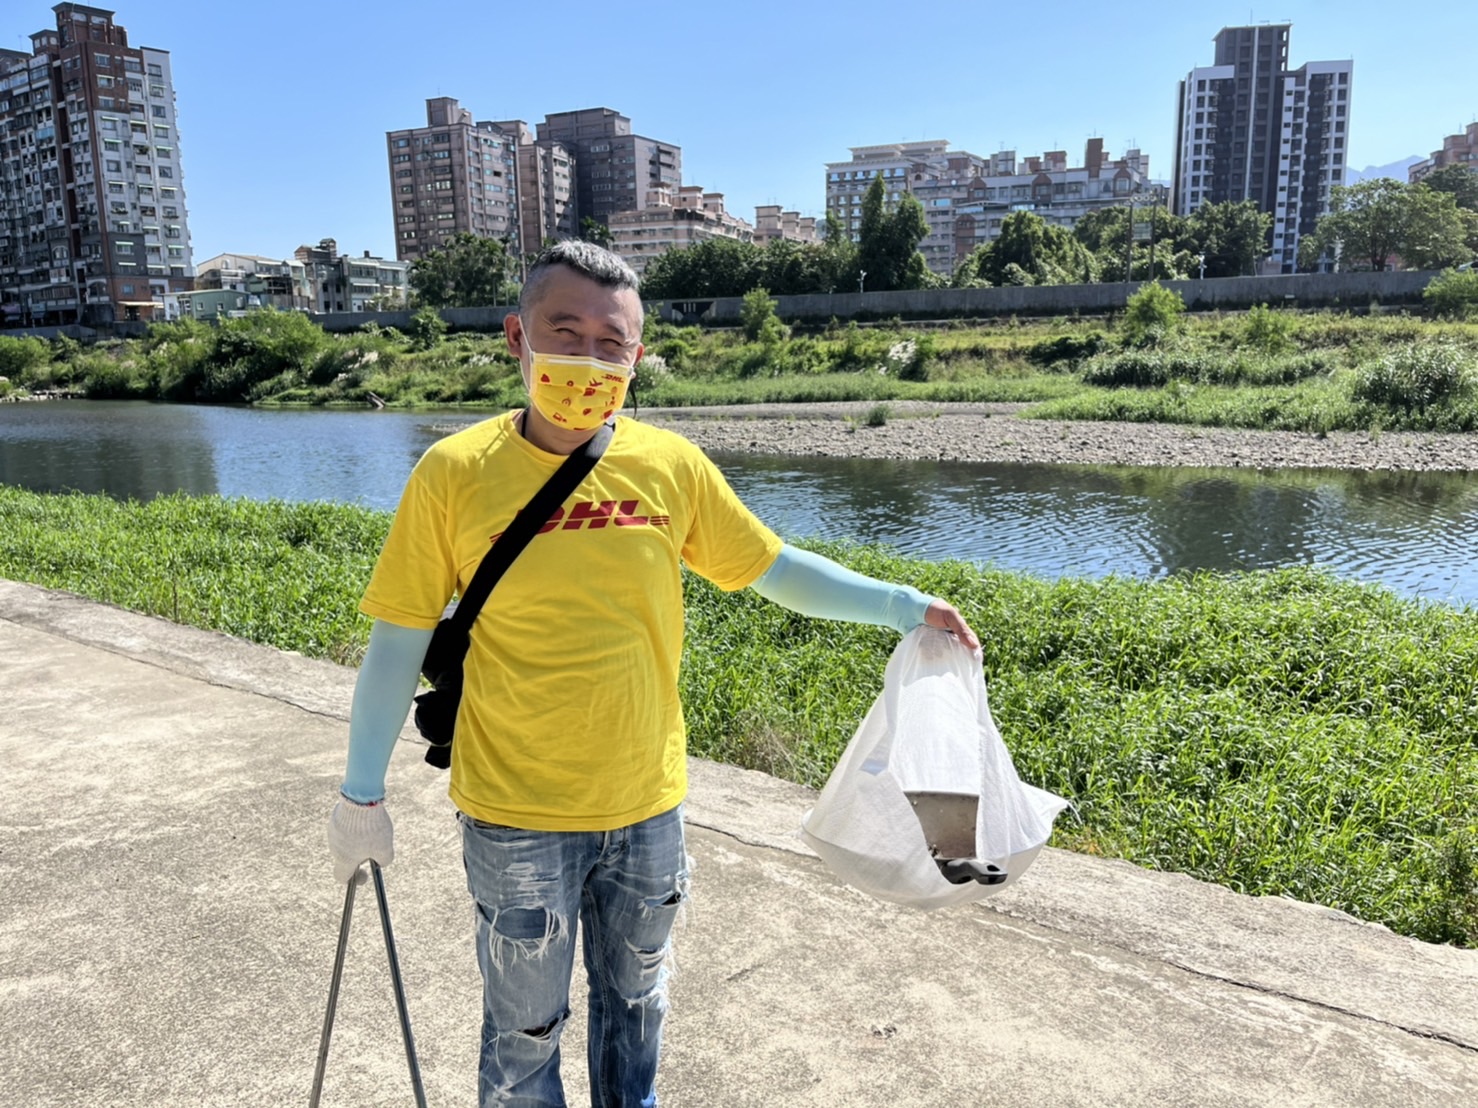 DHL國際快遞公司企業志工黃柏鈞意外的在河岸撿到任意丟棄的炒菜鍋